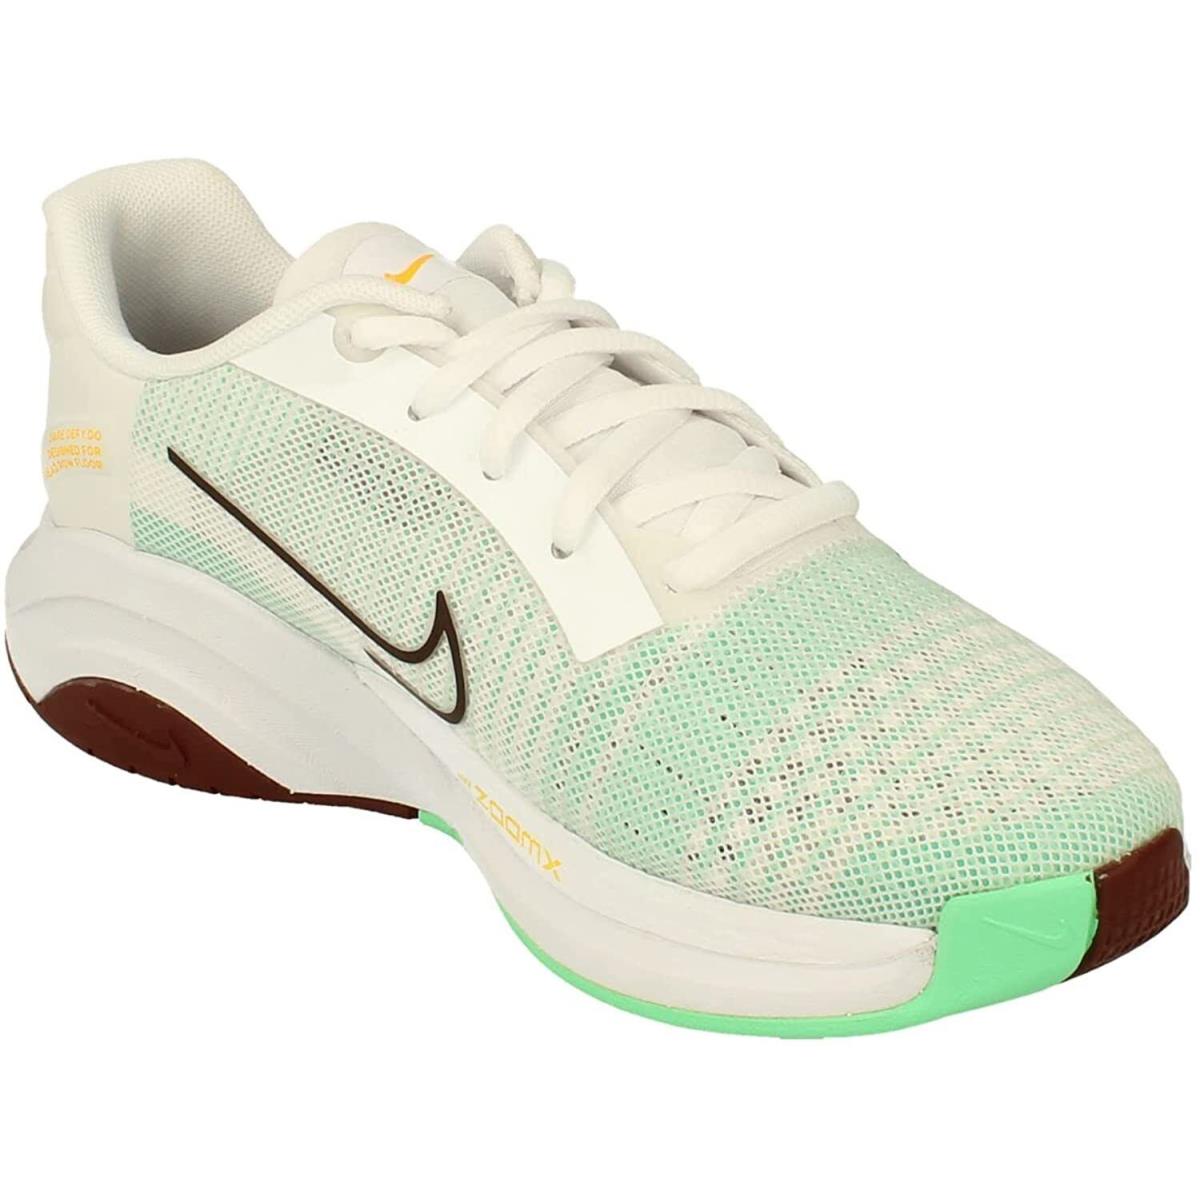 Nike Womens Zoomx Superrep Surge Running Shoe CK9406 135 Size 8 US